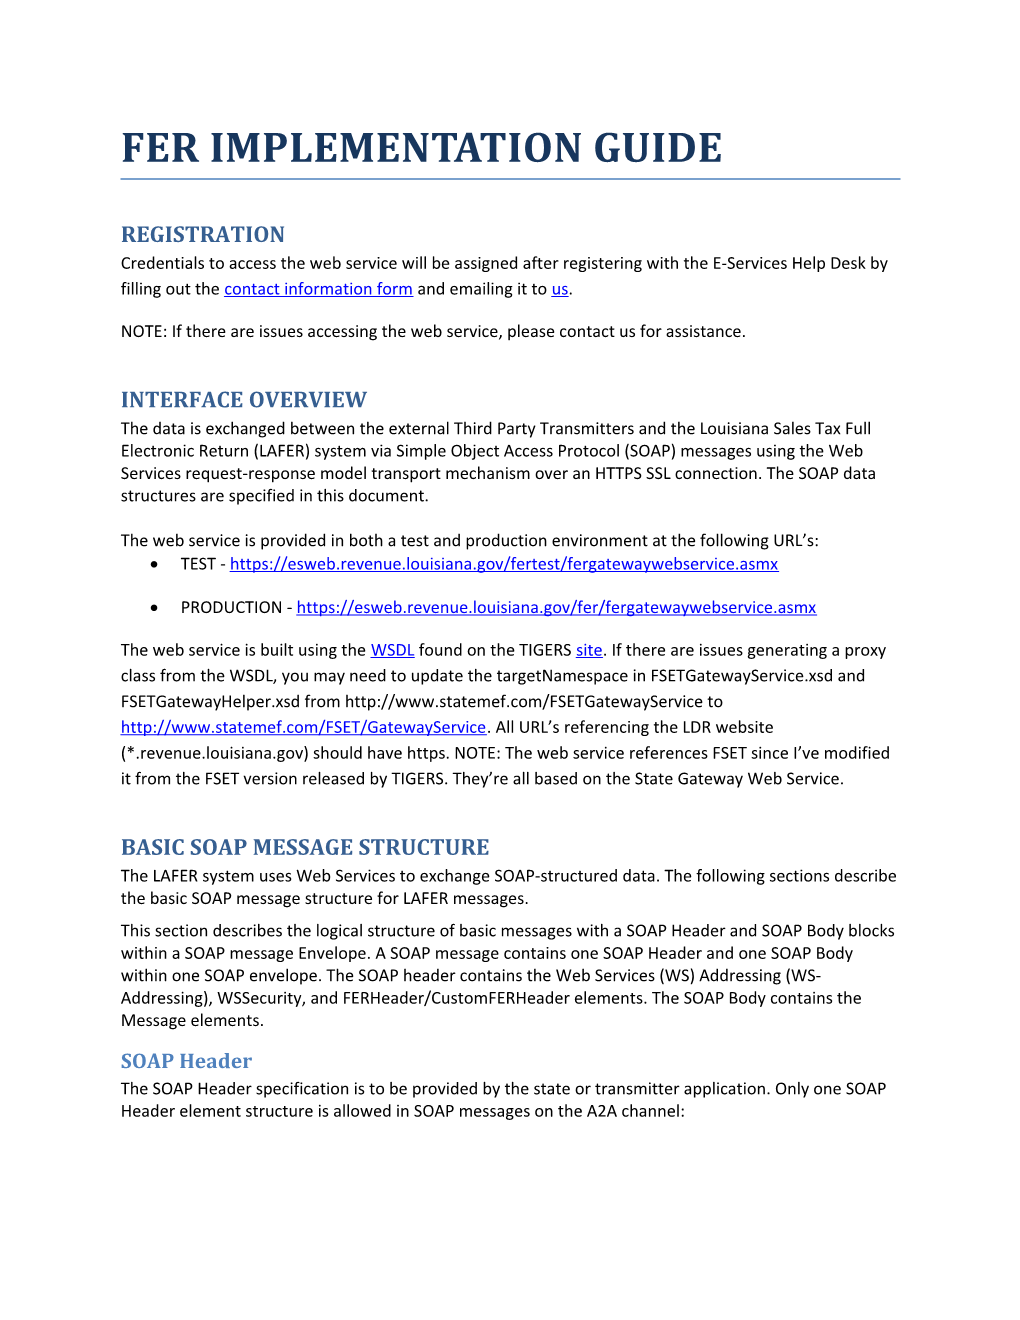 Louisiana Department of Revenue - 2012 FER Implementation Guide